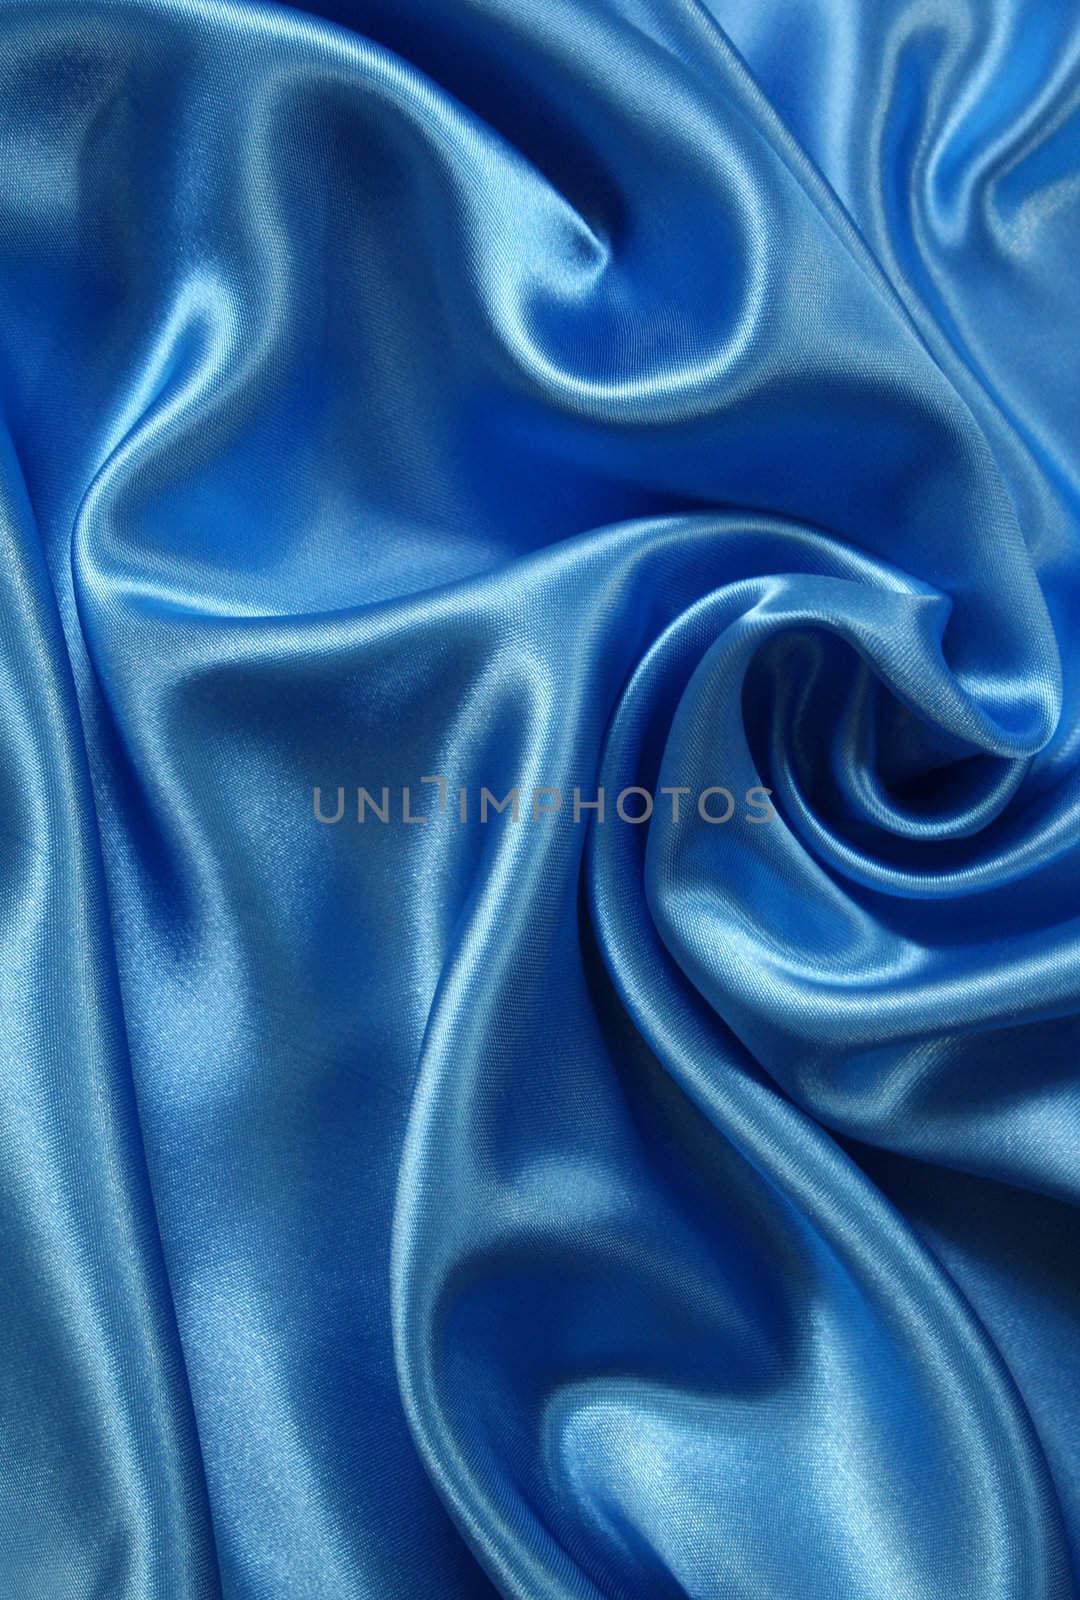 Smooth elegant dark blue silk by oxanatravel